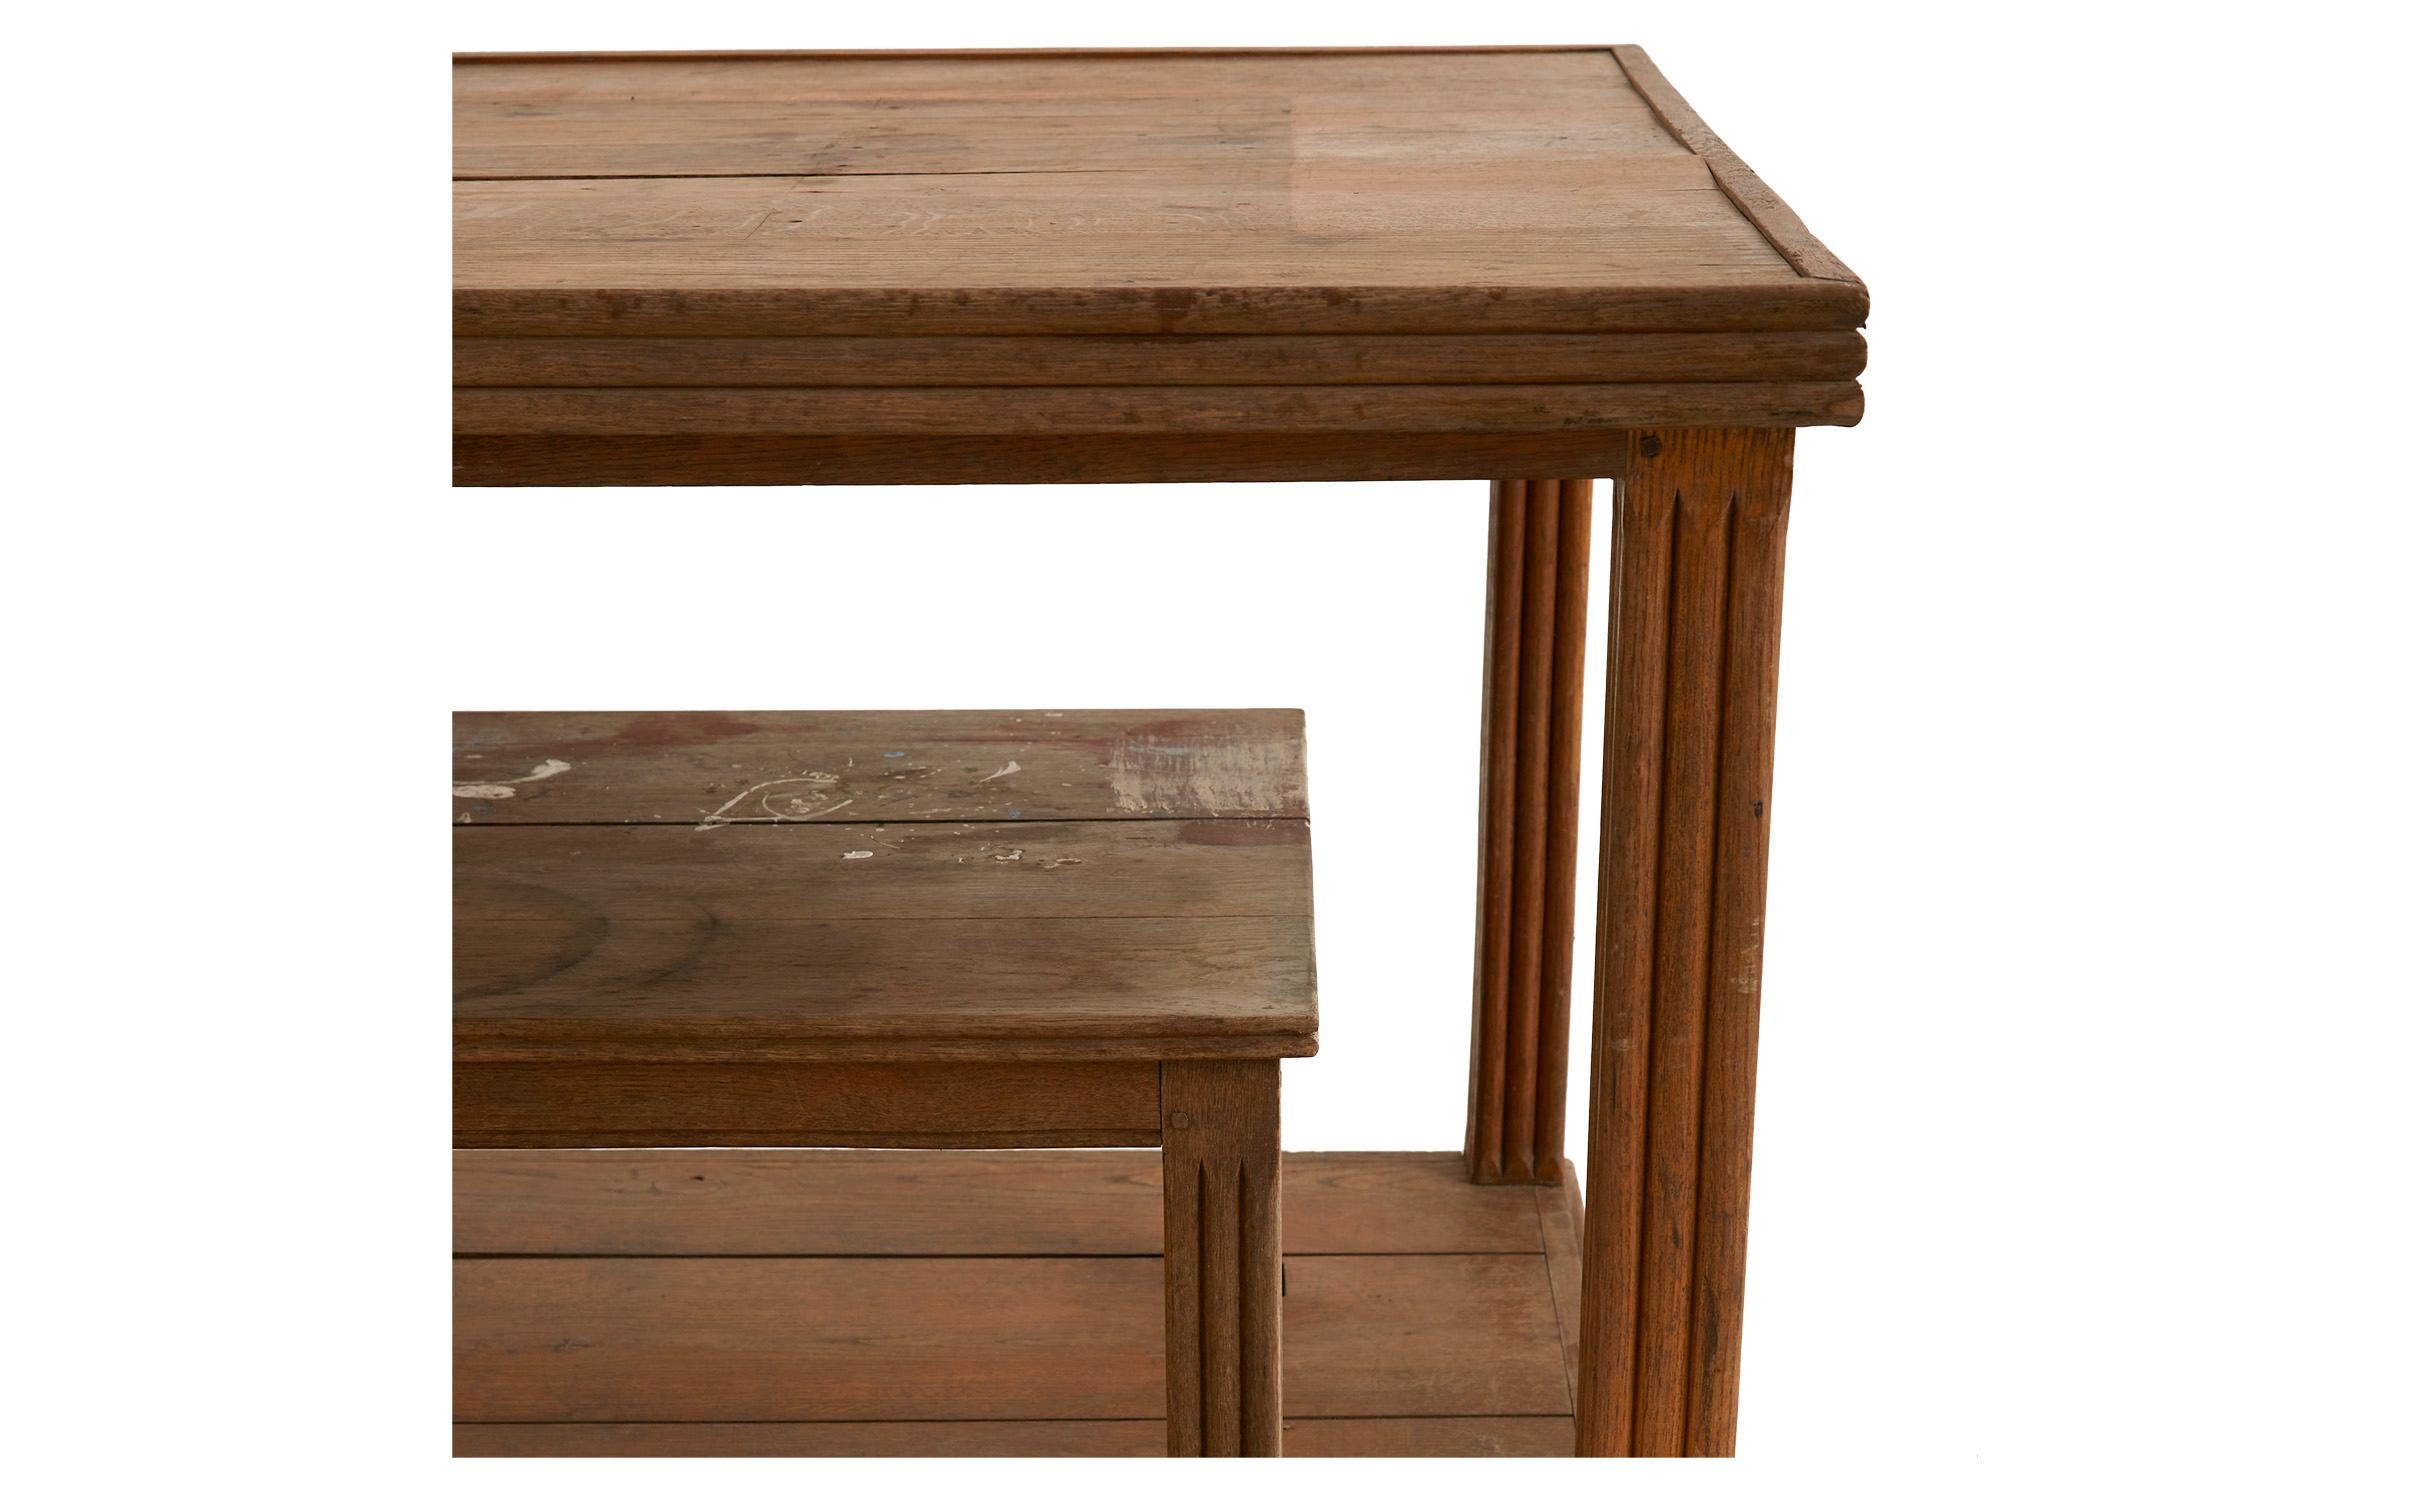 Early 20th Century Wooden Dressmaker's Table (amerikanisch)